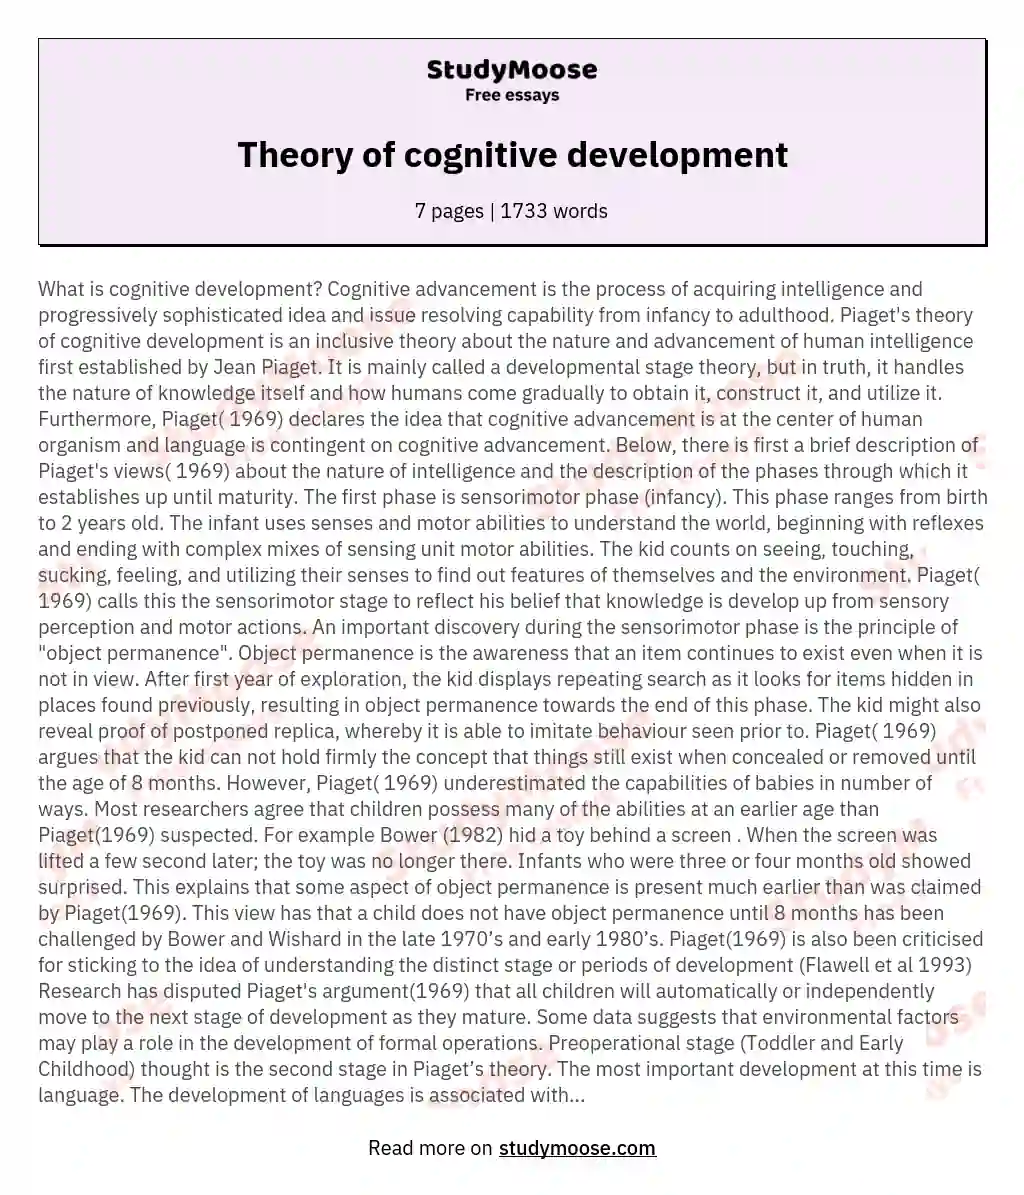 cognitive development essay example